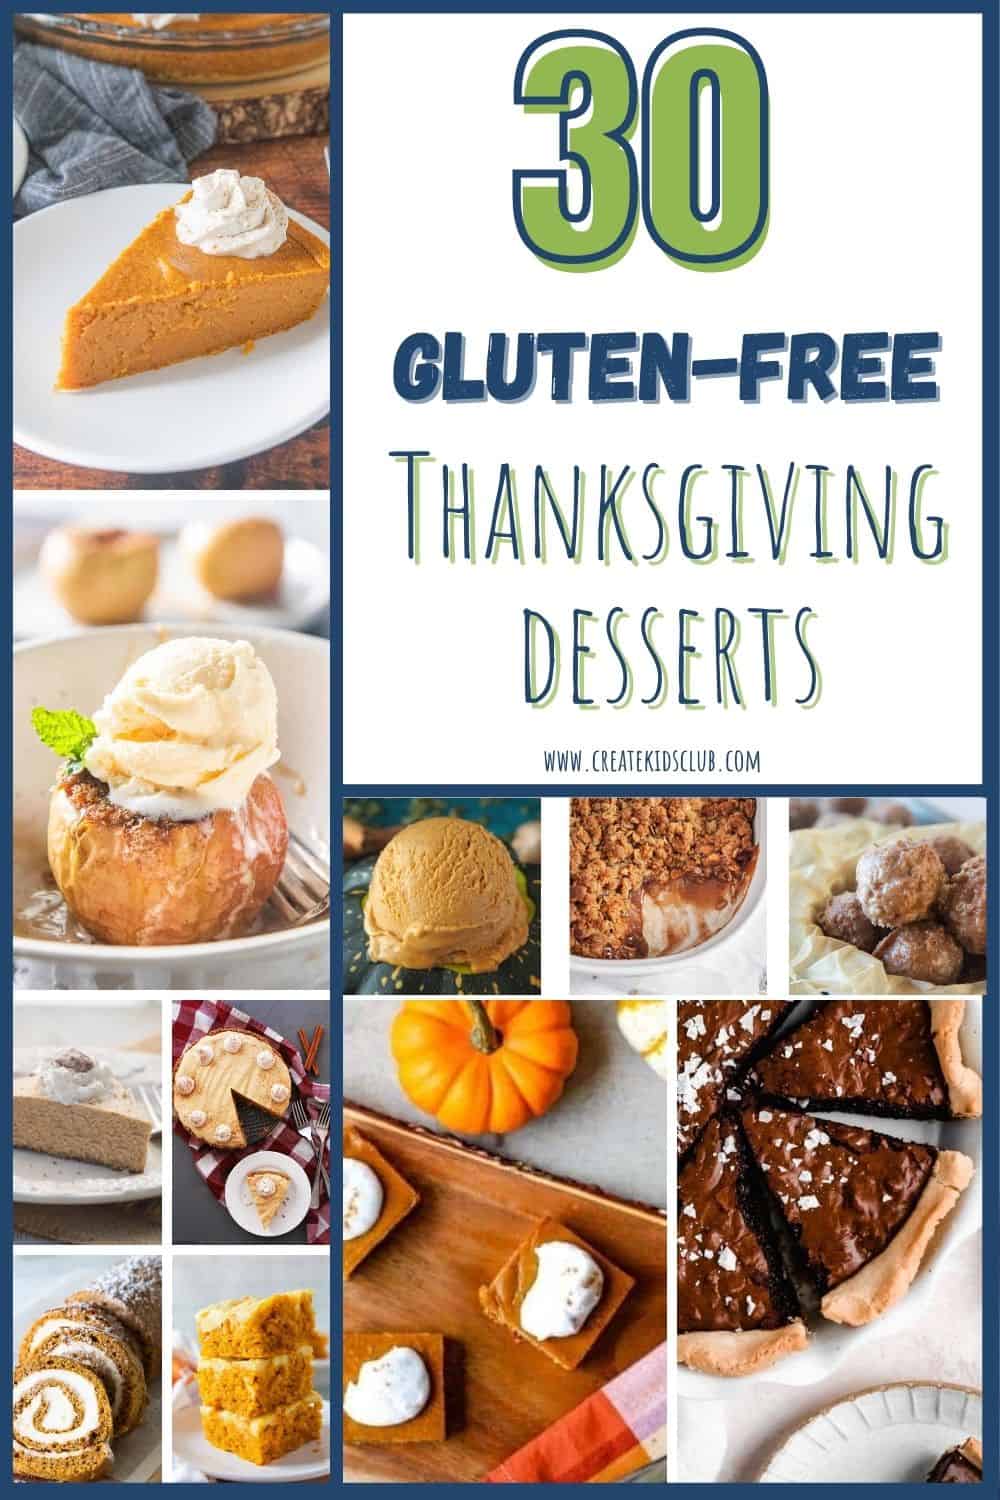 11 pictures of gluten free thanksgiving dessert recipes.